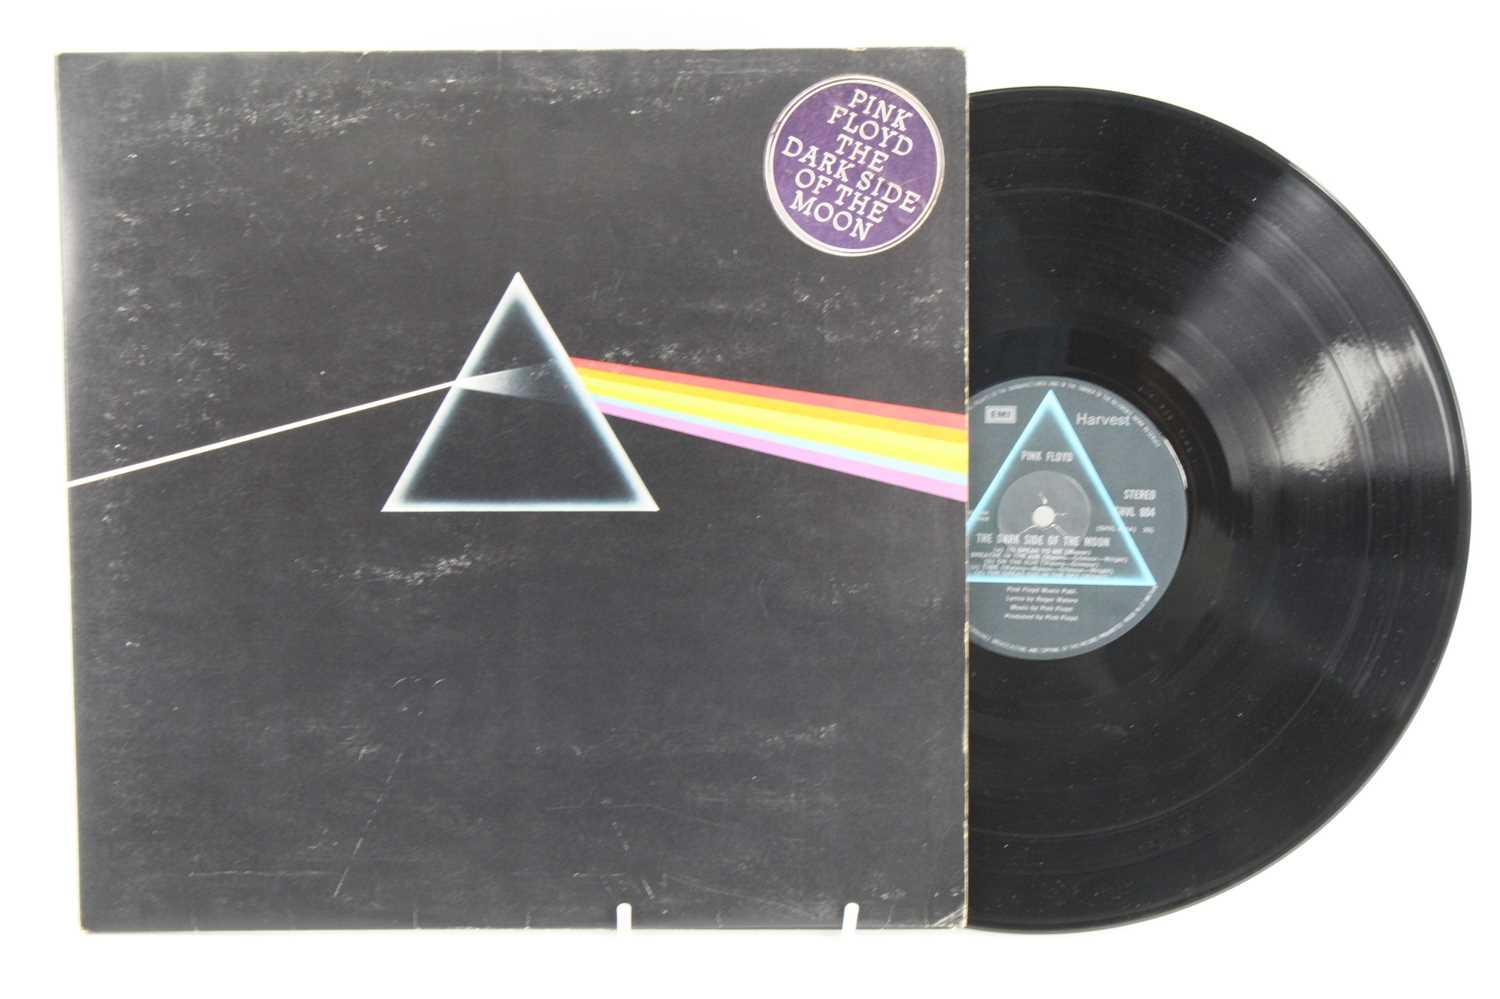 Lot 543 - Pink Floyd, Dark Side Of The Moon, Harvest EMI...